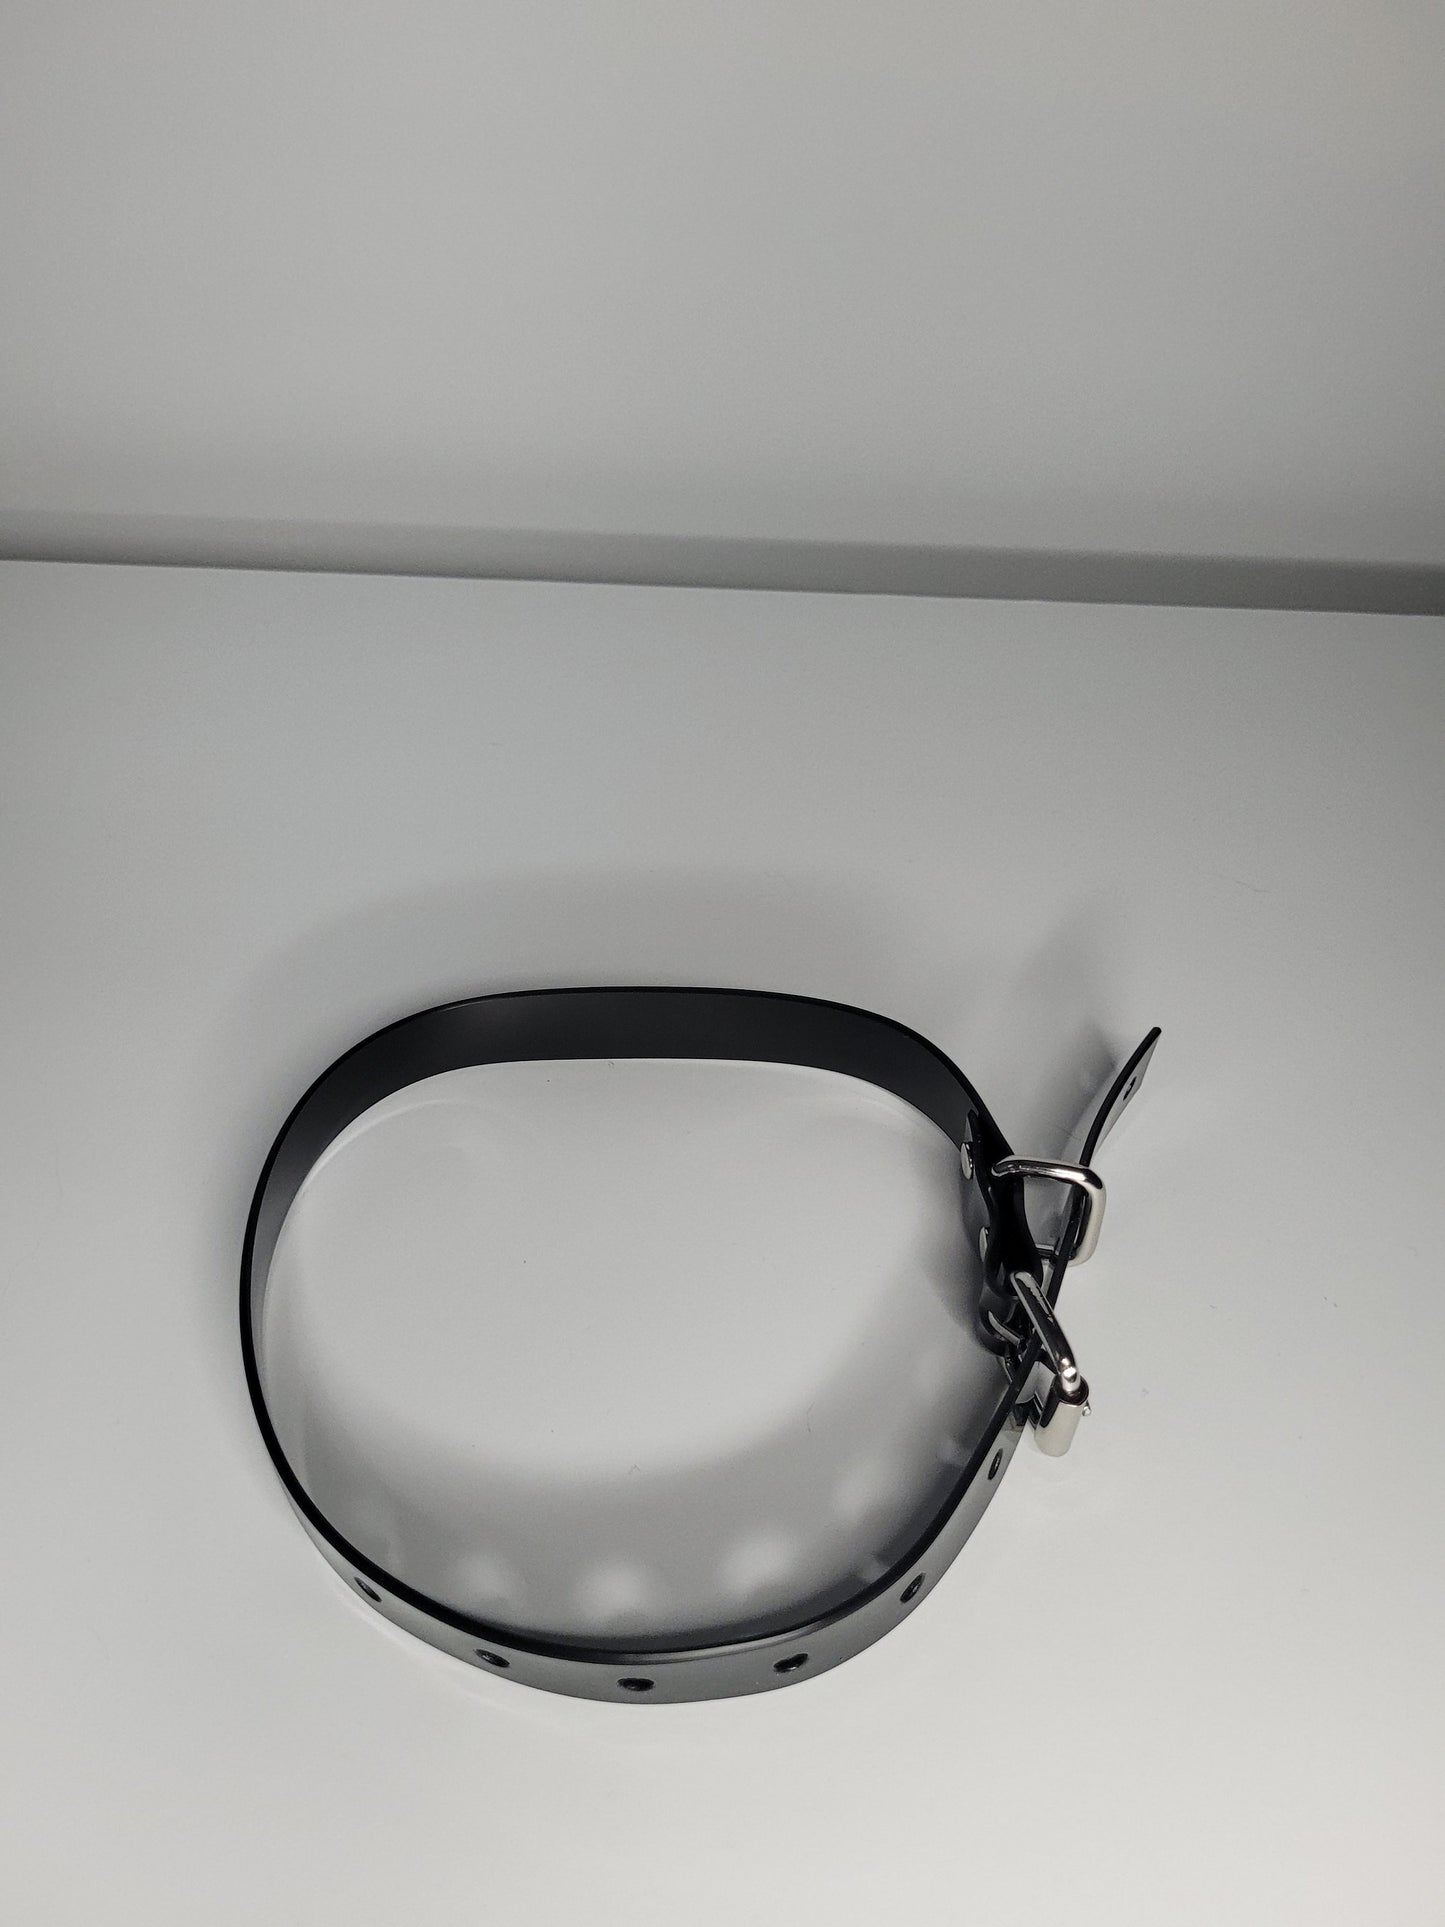 Thin  bondage belt in black PVC